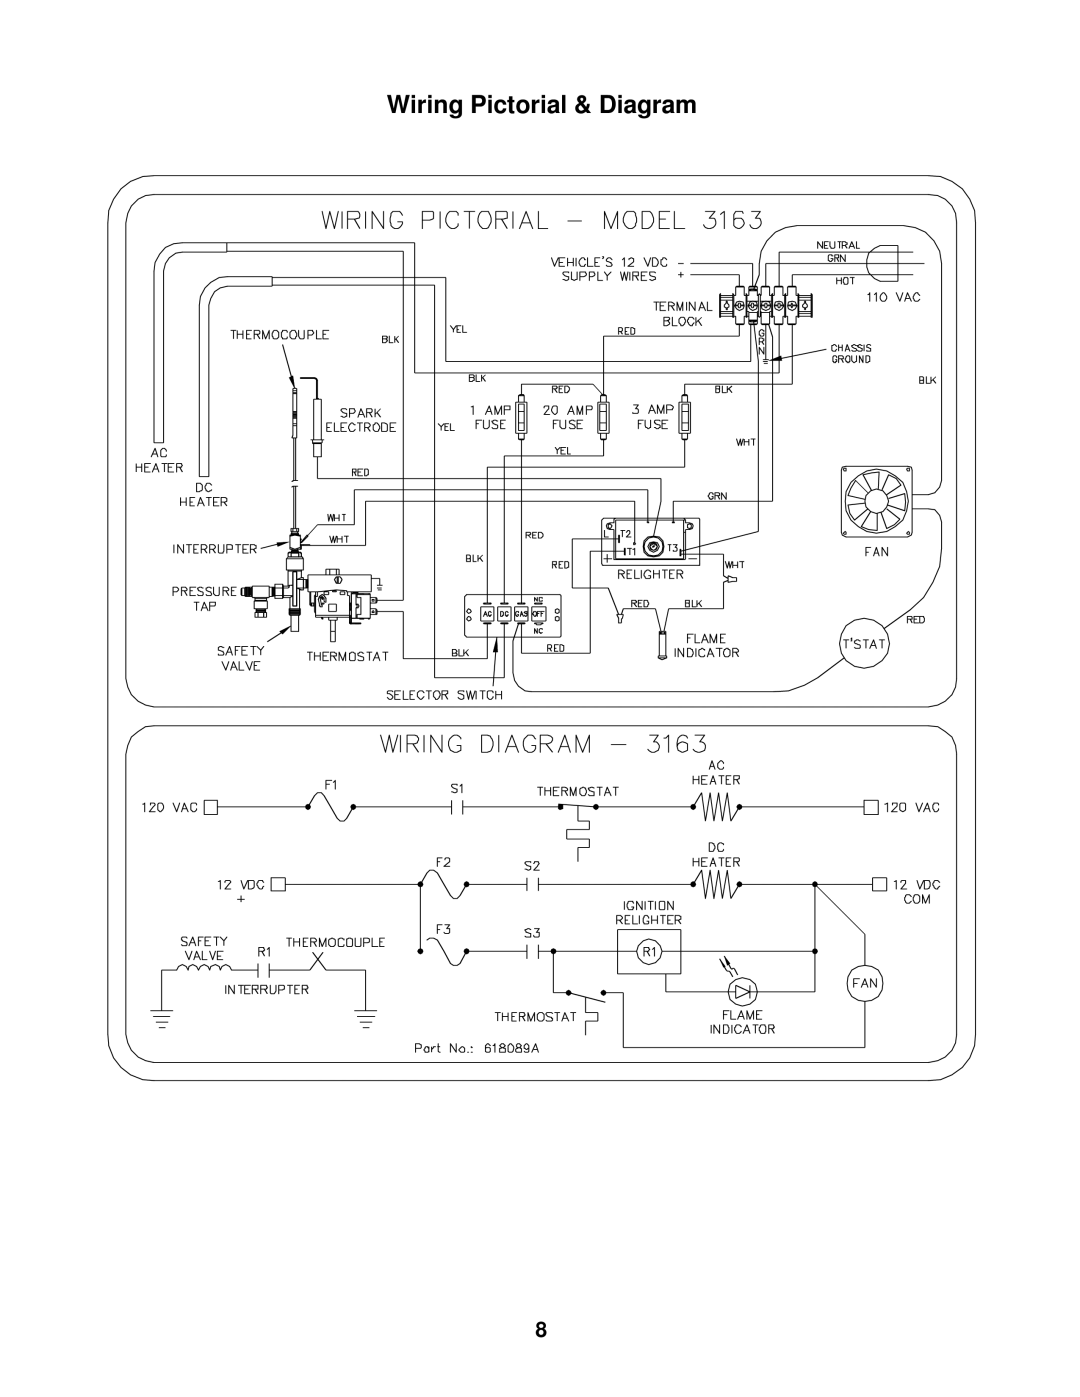 Bryant 3163 service manual Wiring Pictorial & Diagram 